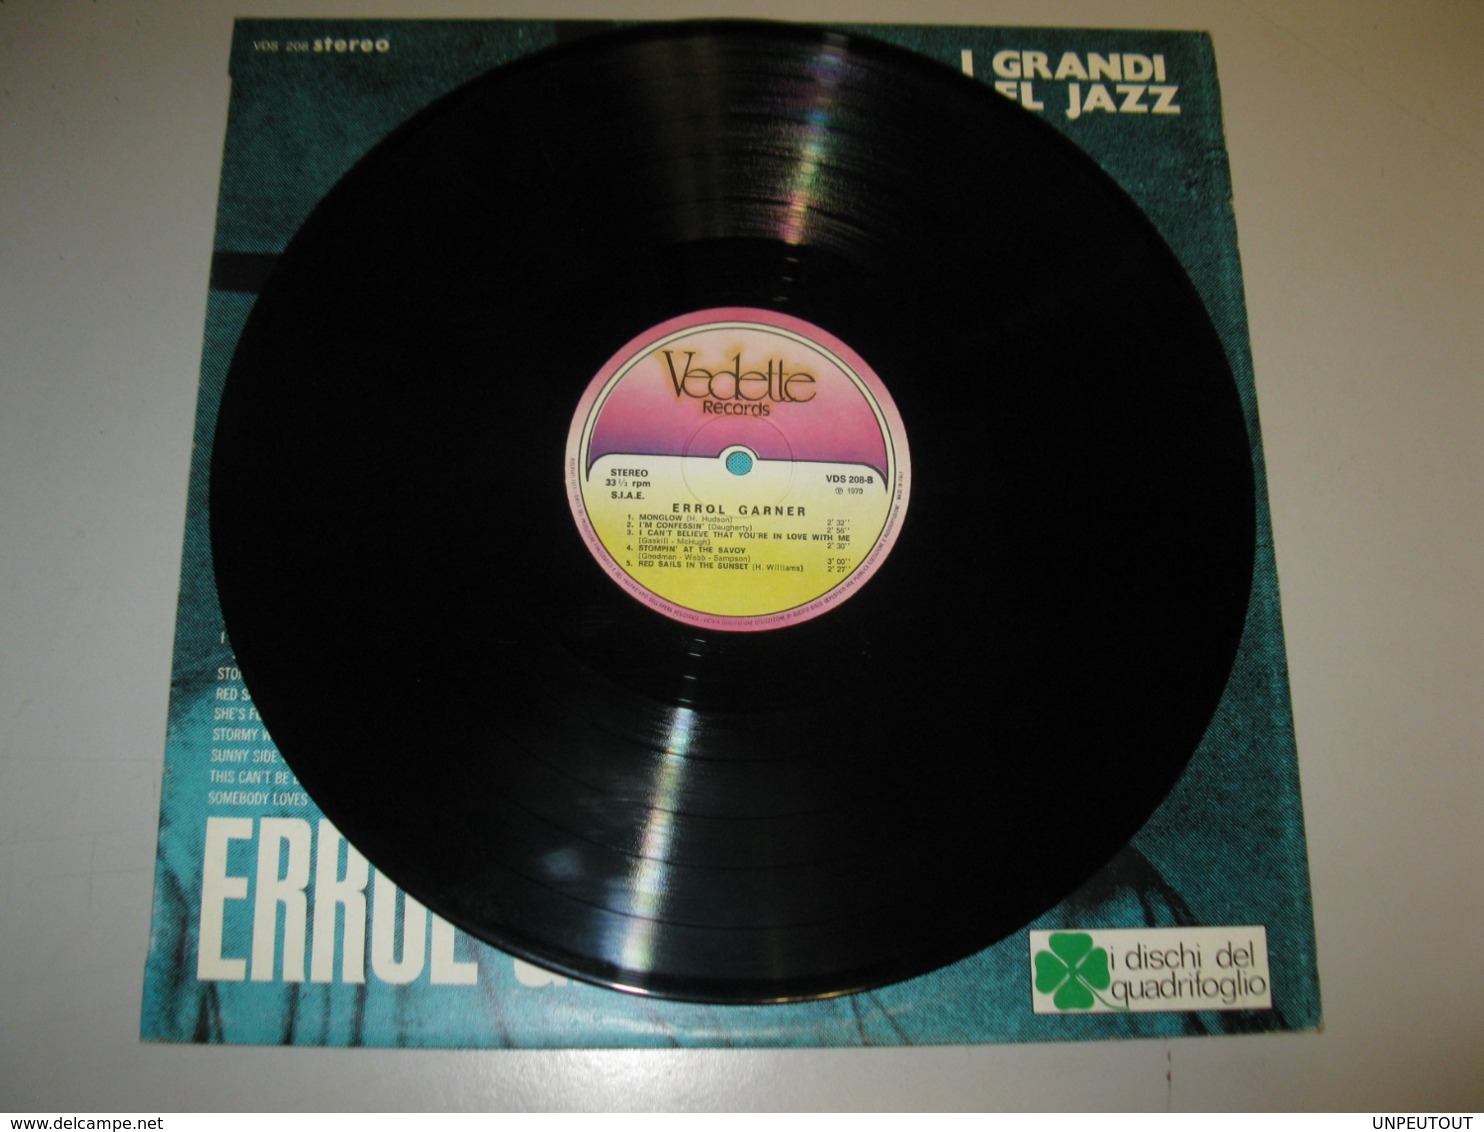 VINYLE ERROL GARNER 33 T VEDETTE / QUADRIFOGLIO (1970) - Jazz